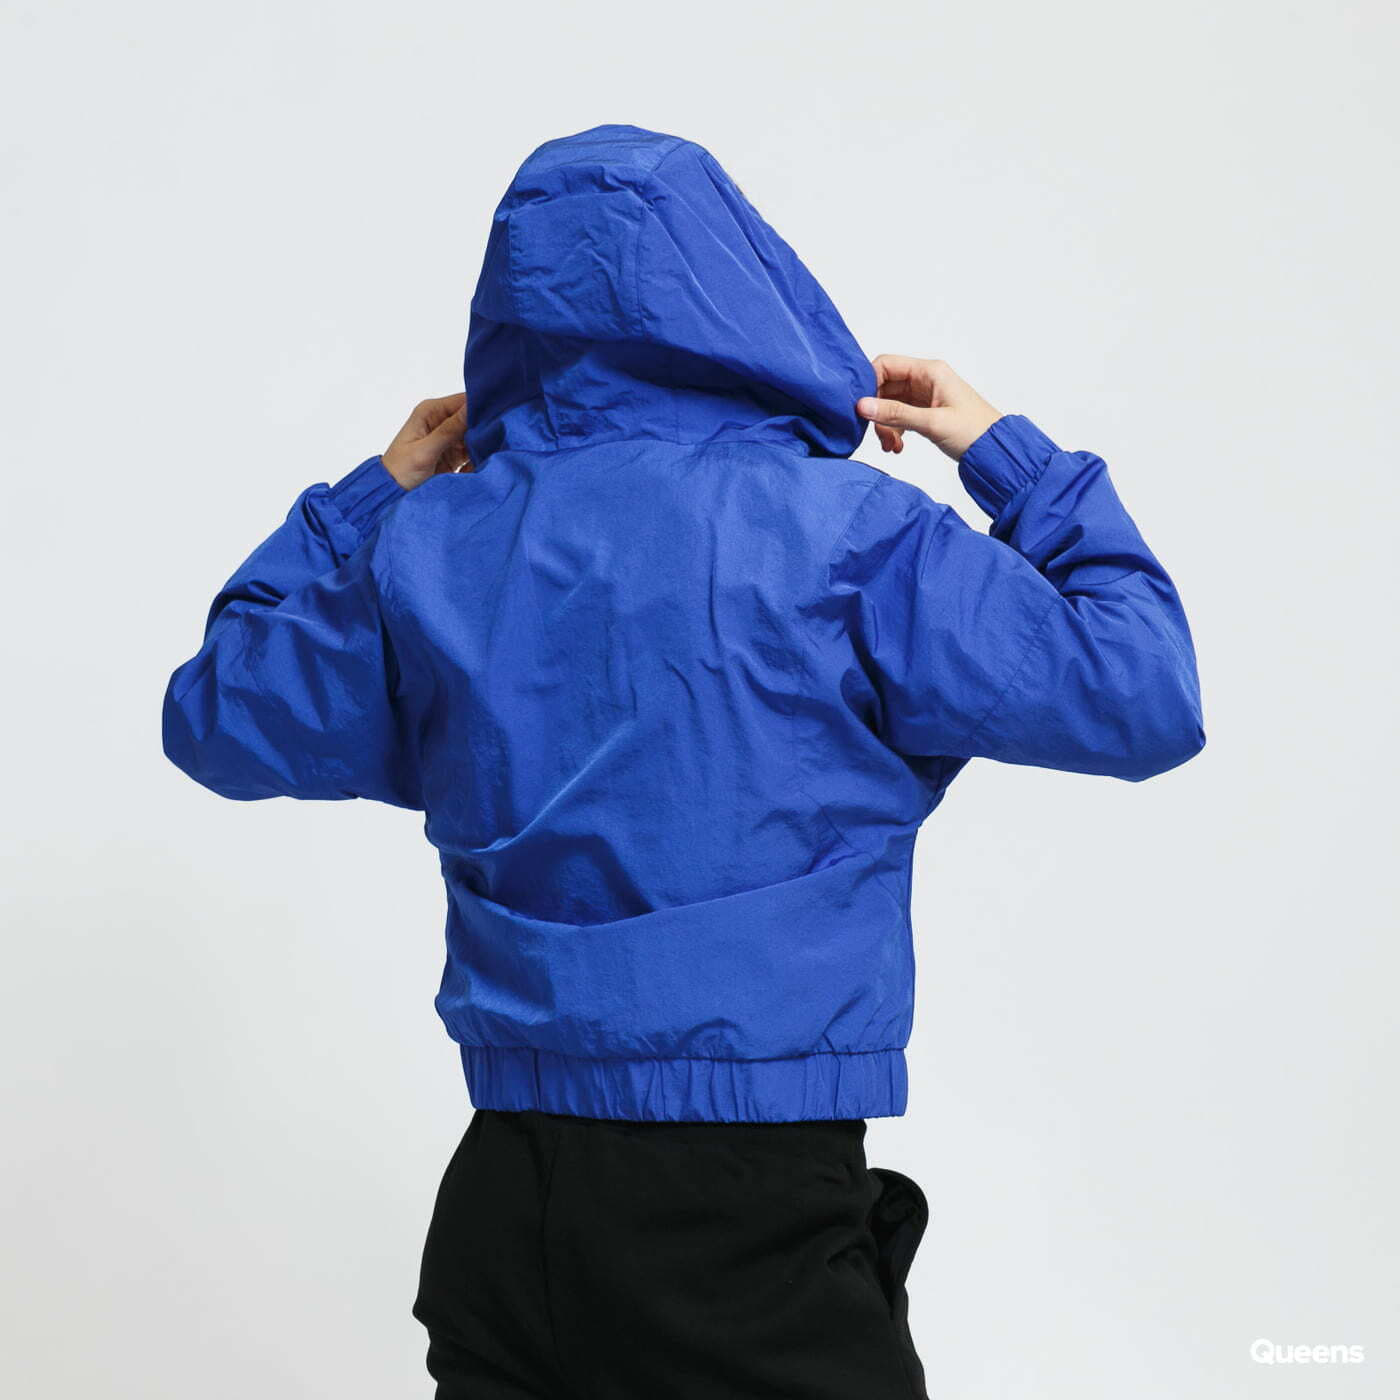 Queens | Coach Ladies Shiny Oversized Urban Jackets Classics Jacket Blue Crinkle Nylon